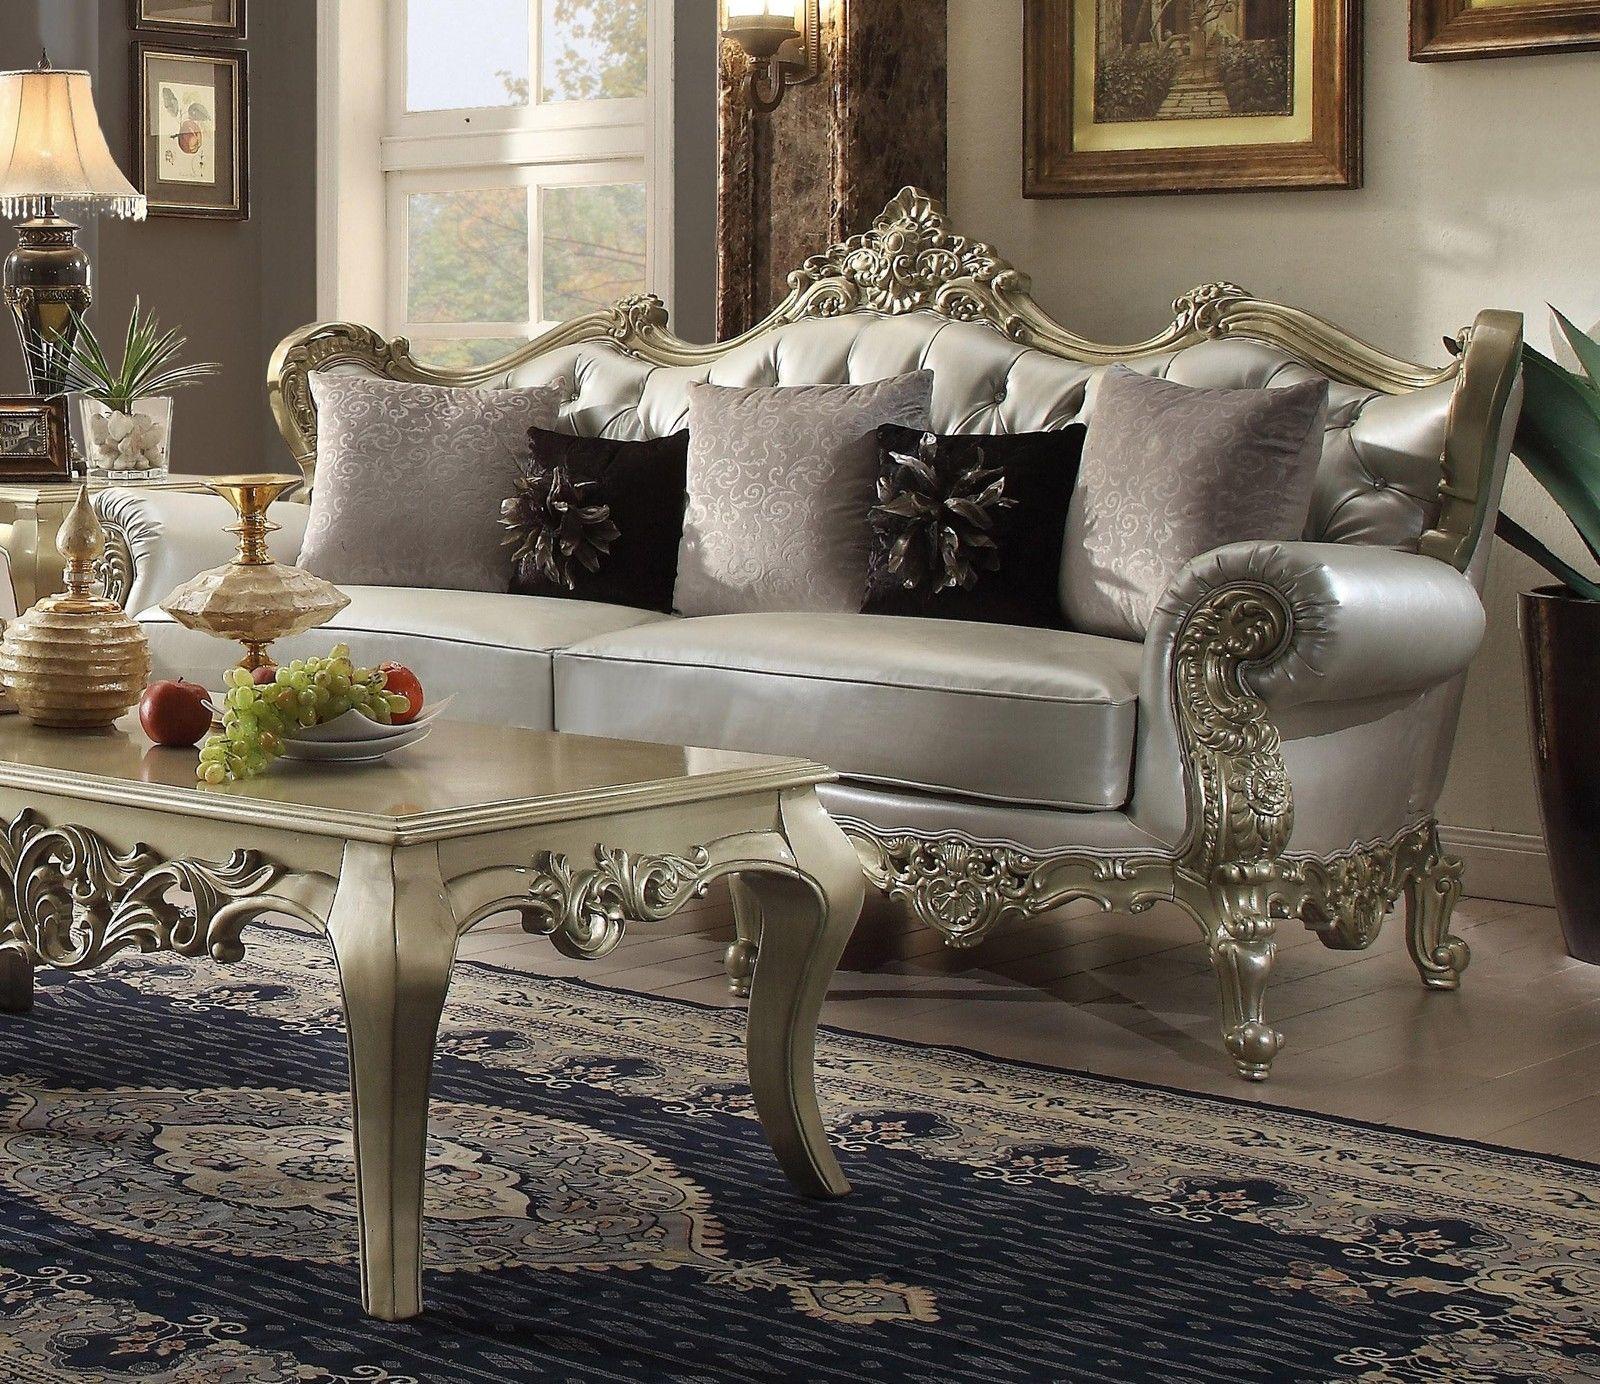 

    
Belle Silver Victorian Sofa Traditional Homey Design HD-13006
